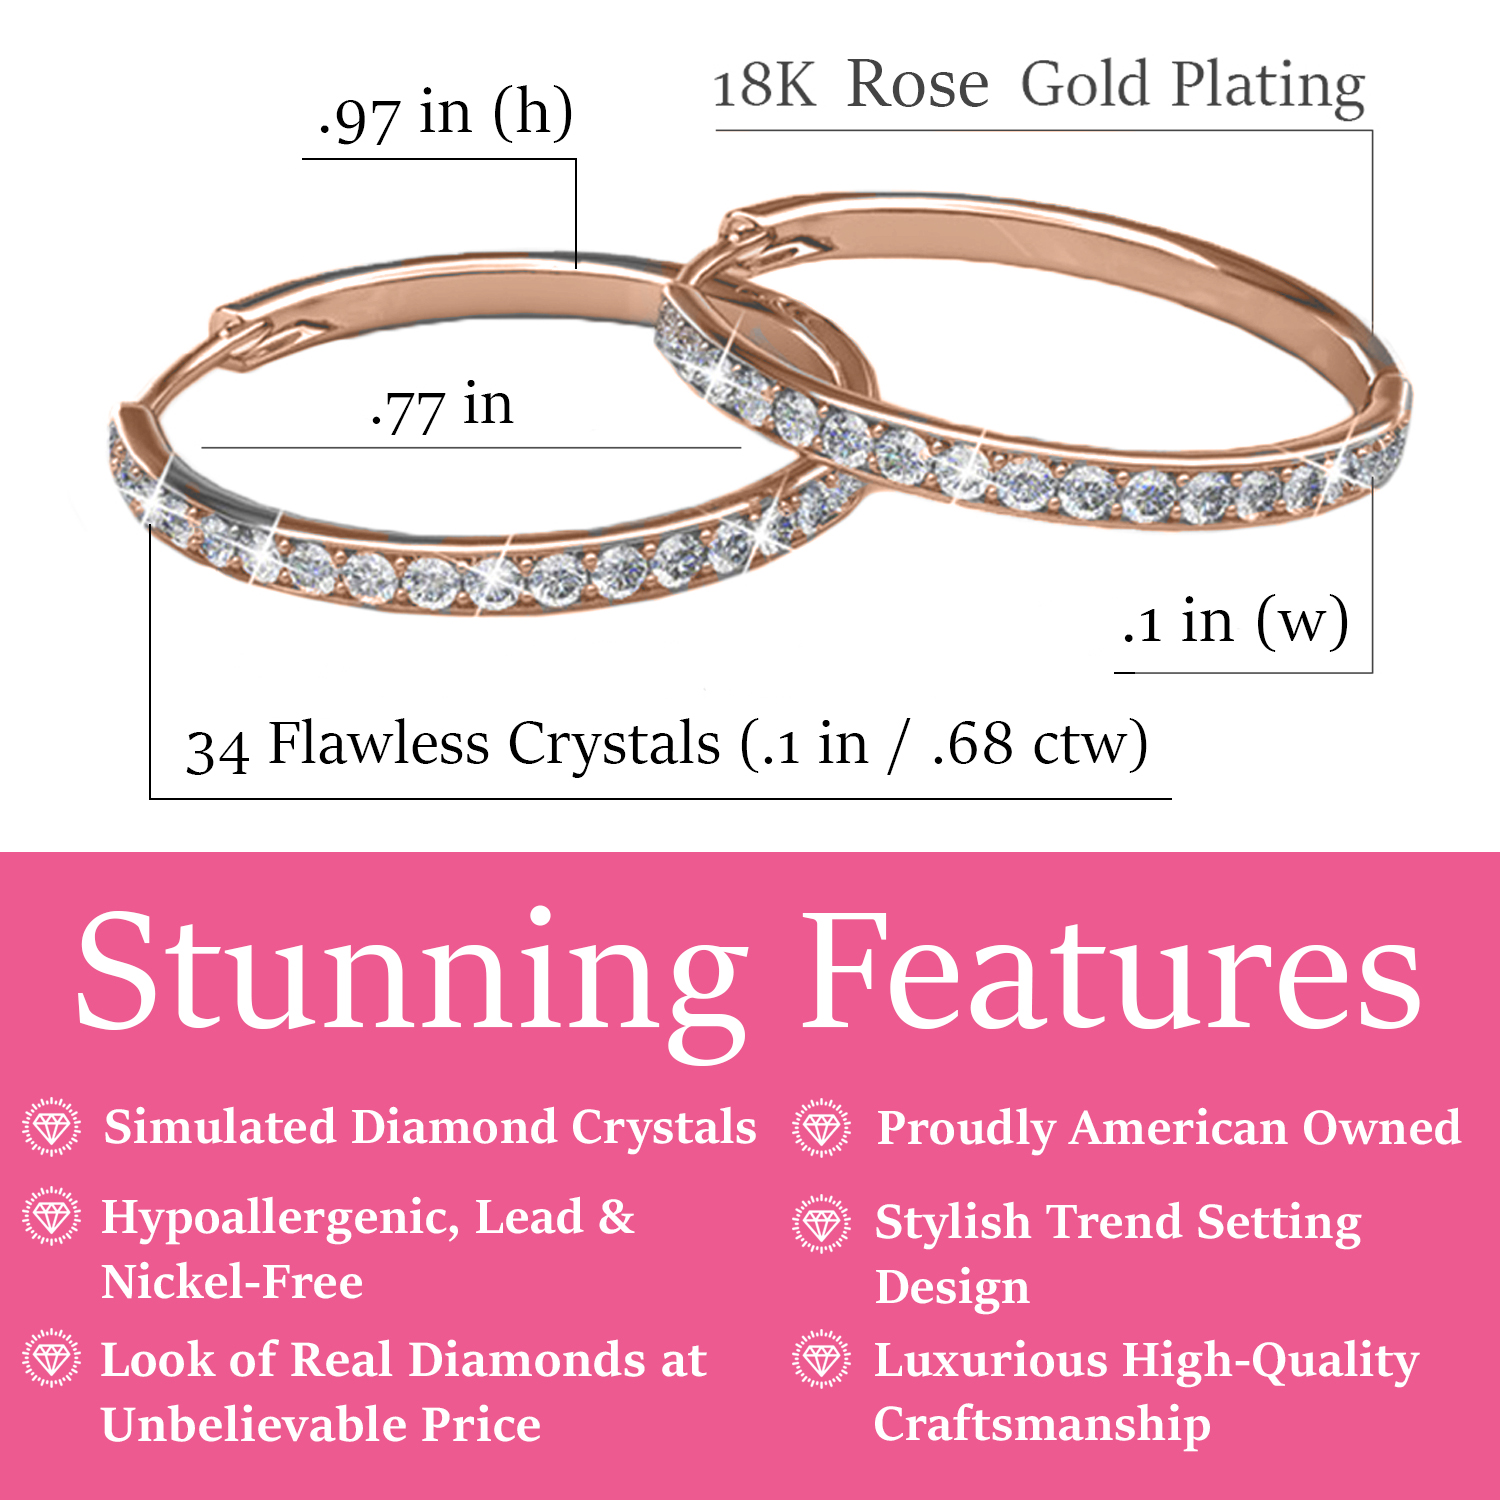 Cate & Chloe Bianca 18k Rose Gold Plated Hoop Earrings | Women's Crystal Earrings | Gift for Her - image 4 of 11